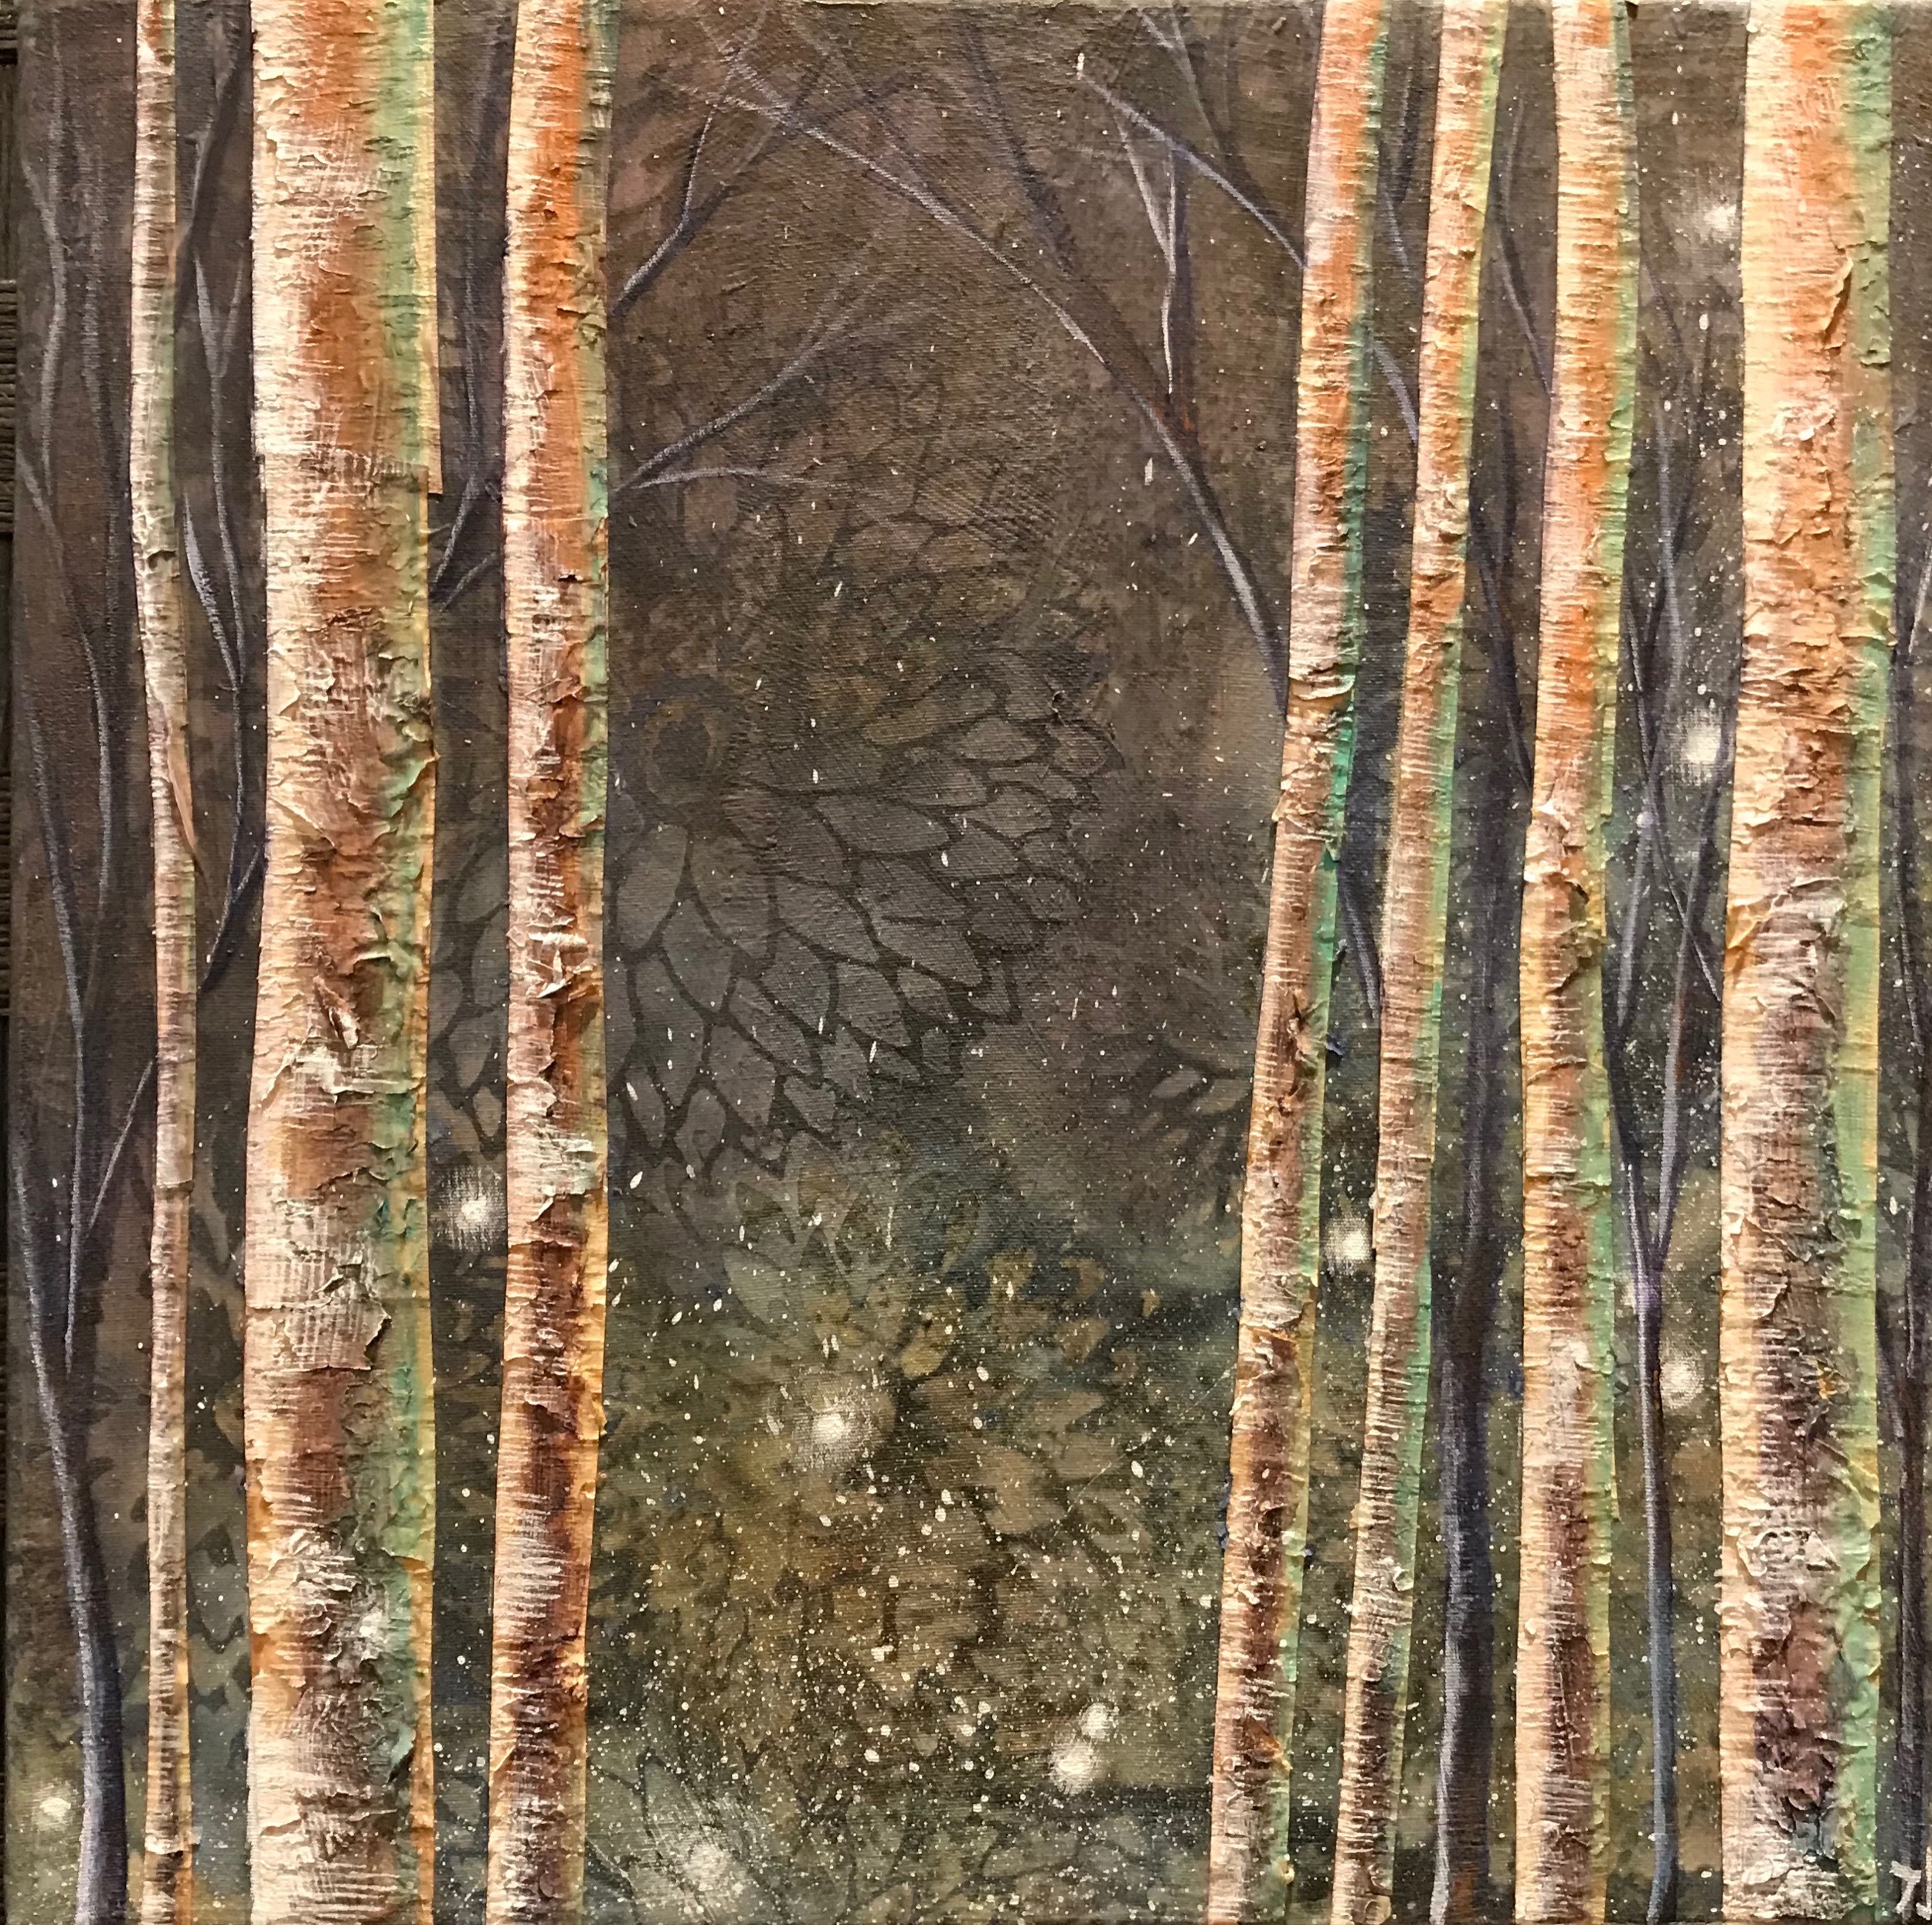  Sold Mixed Media: birch bark and acrylic on fabric. 10” x 10” 